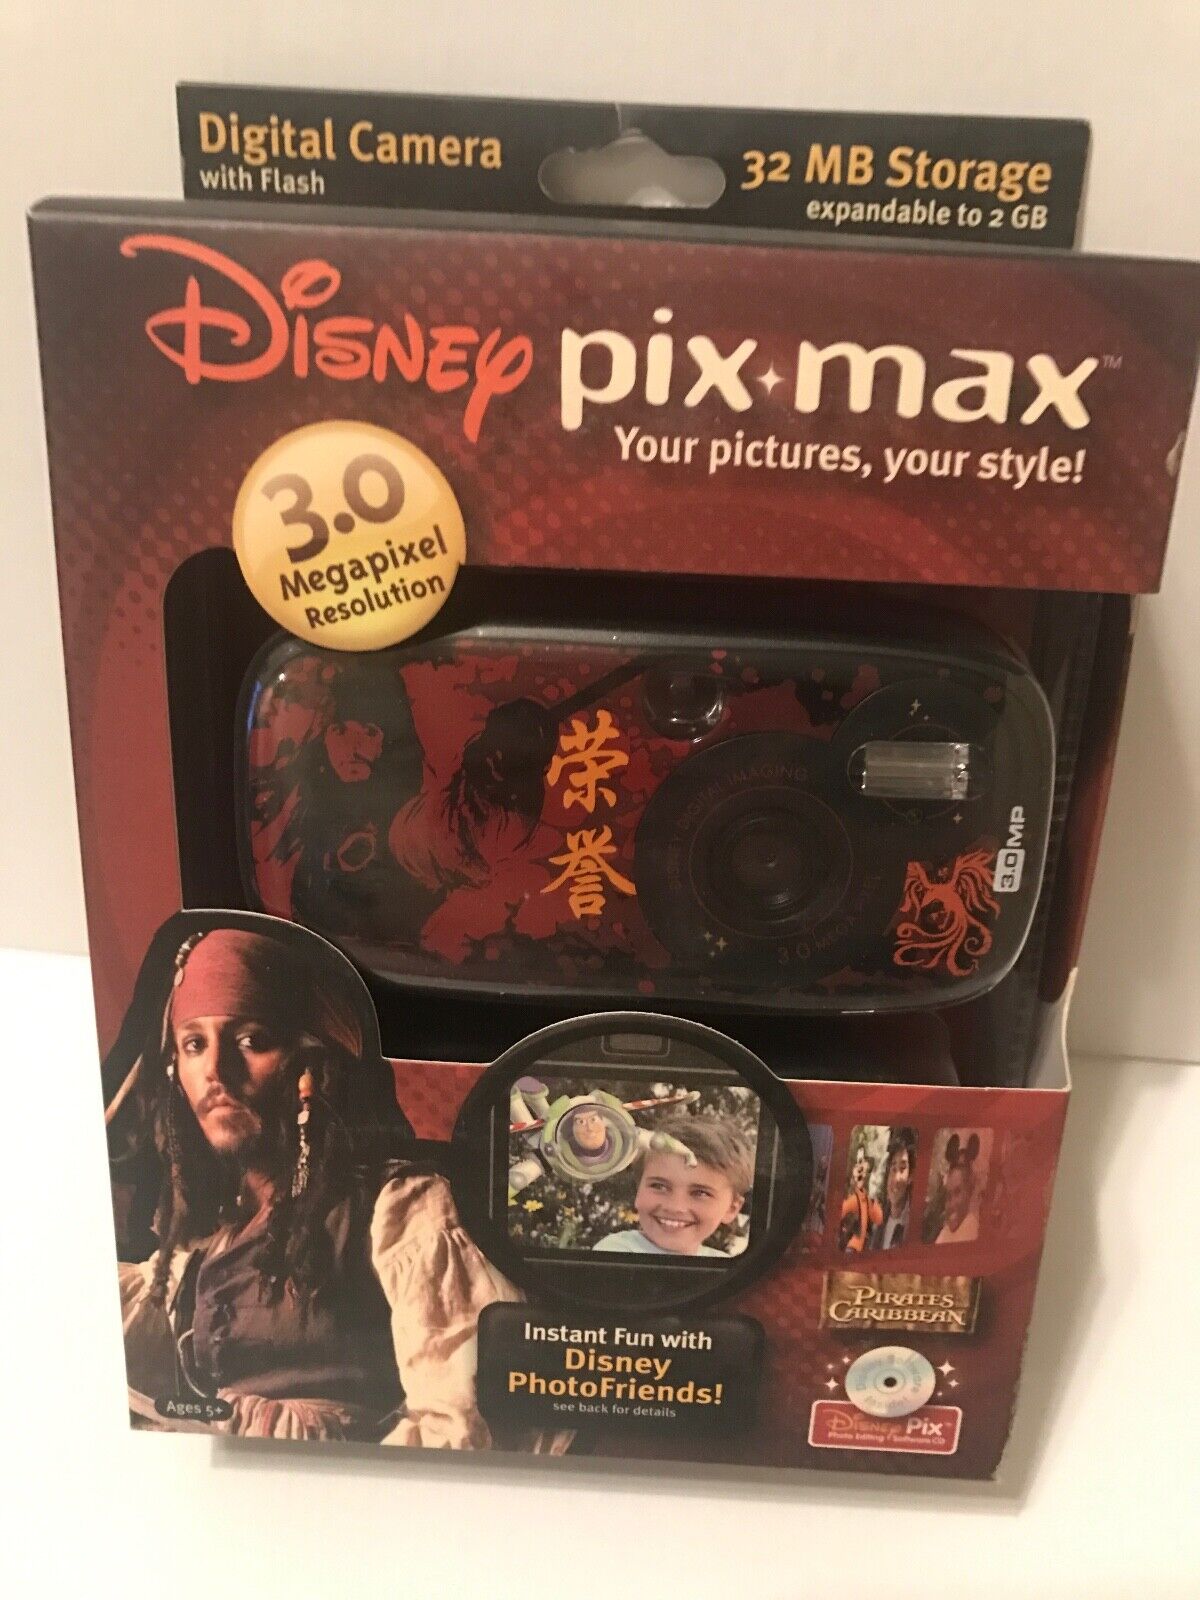 Disney Pix Max Pirates of the Carribean III Digital Camera 3.0 MP 747 New In Box